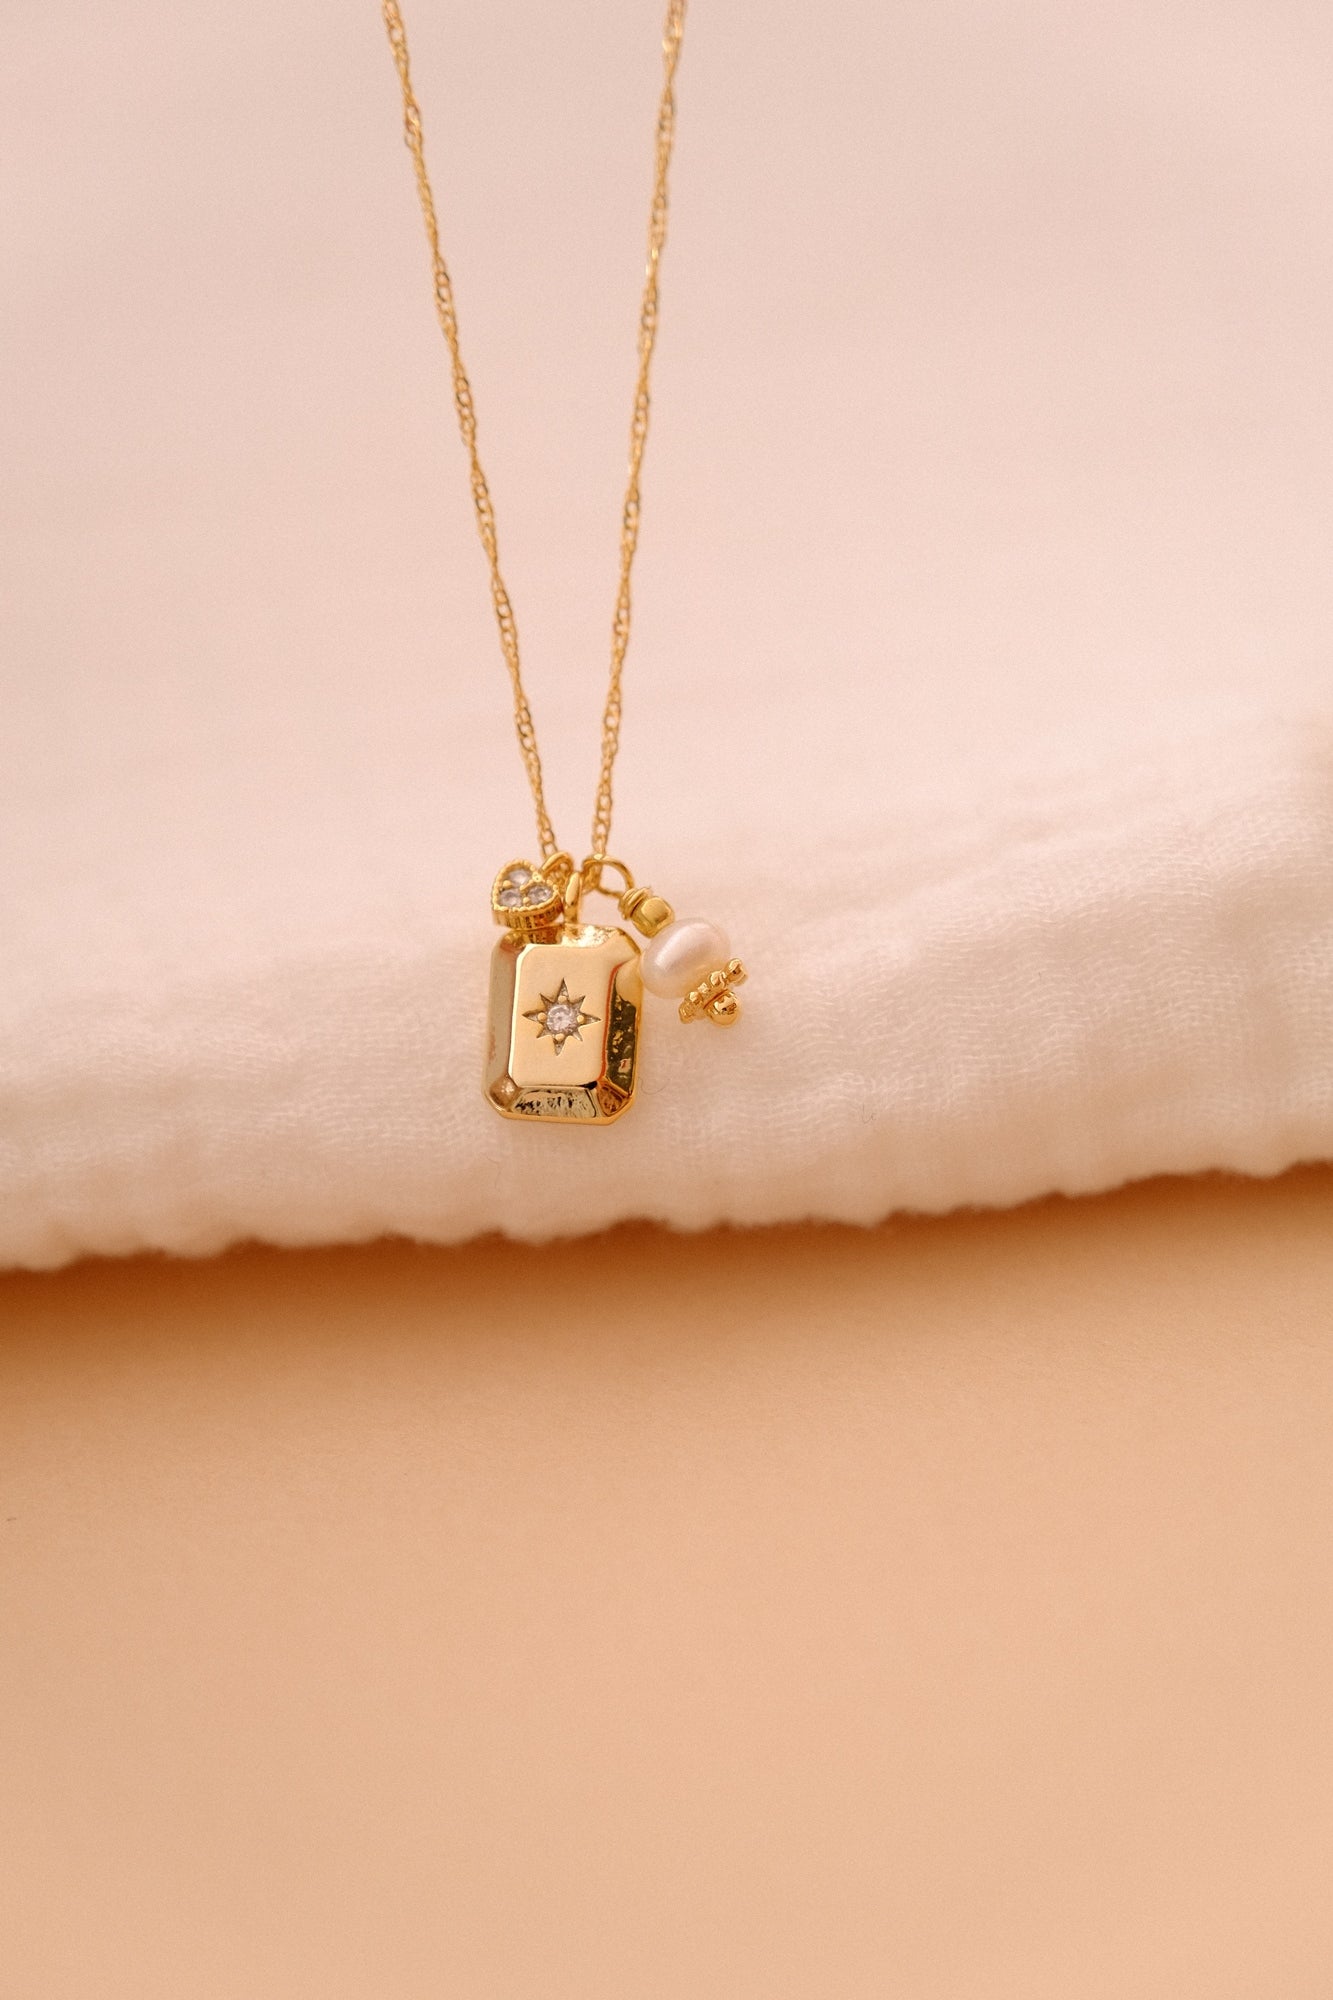 “Lana” necklace